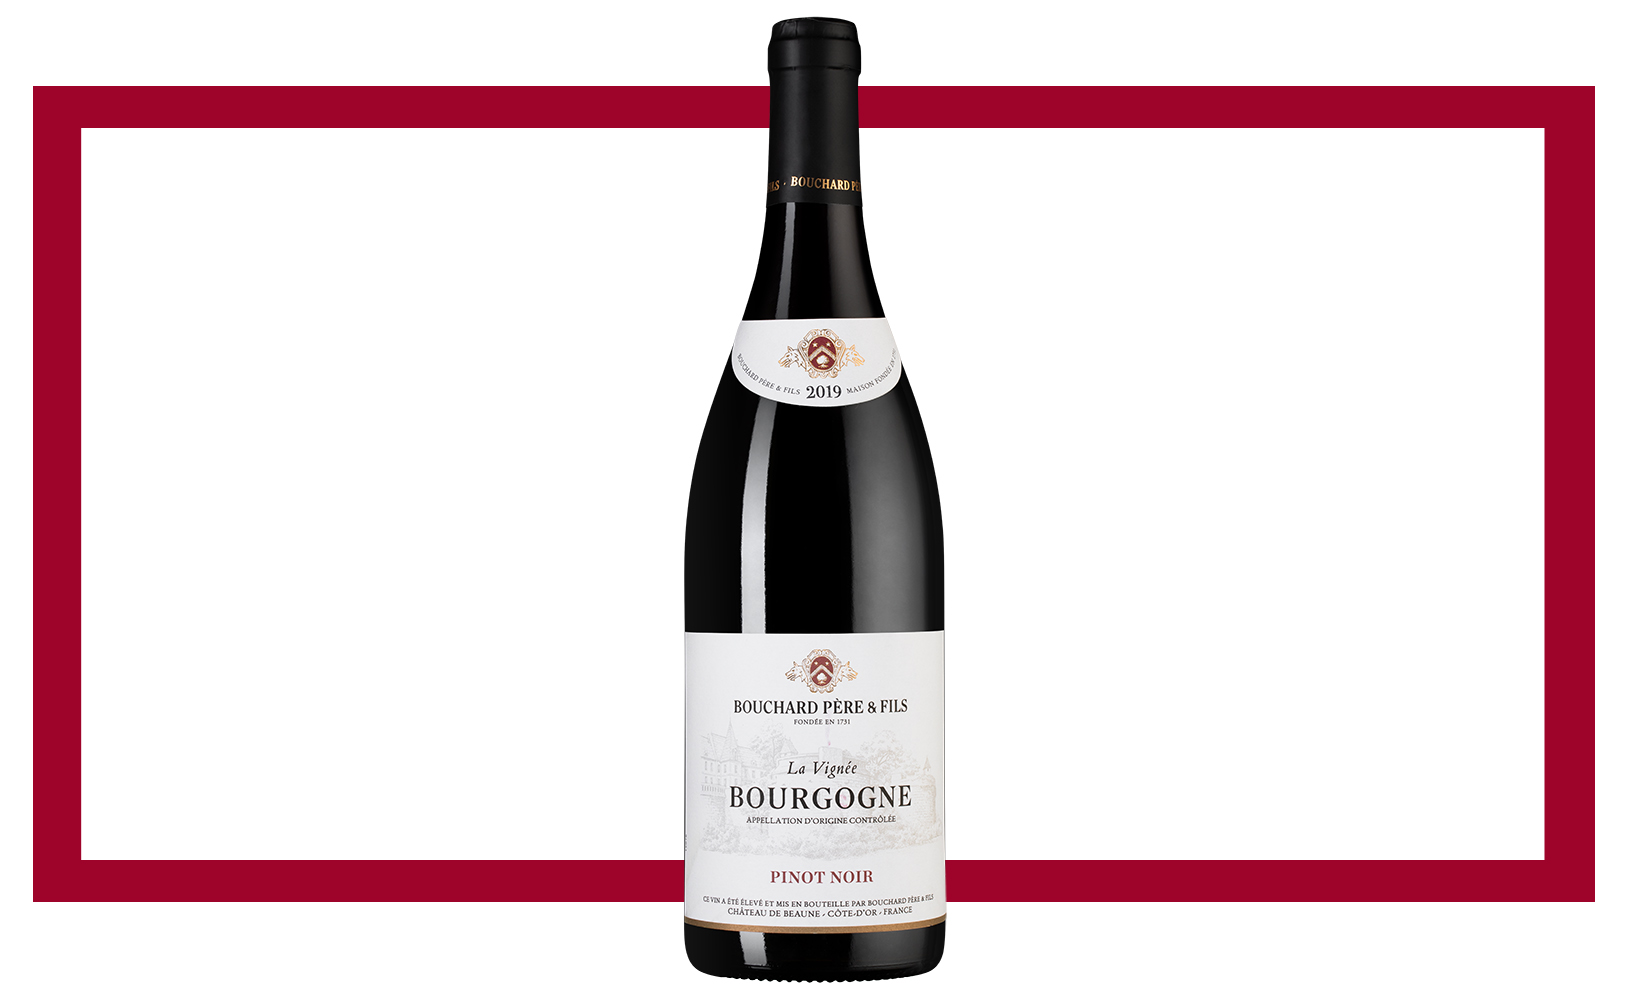 Bouchard Pere & Fils Bourgogne Pinot Noir La Vignee